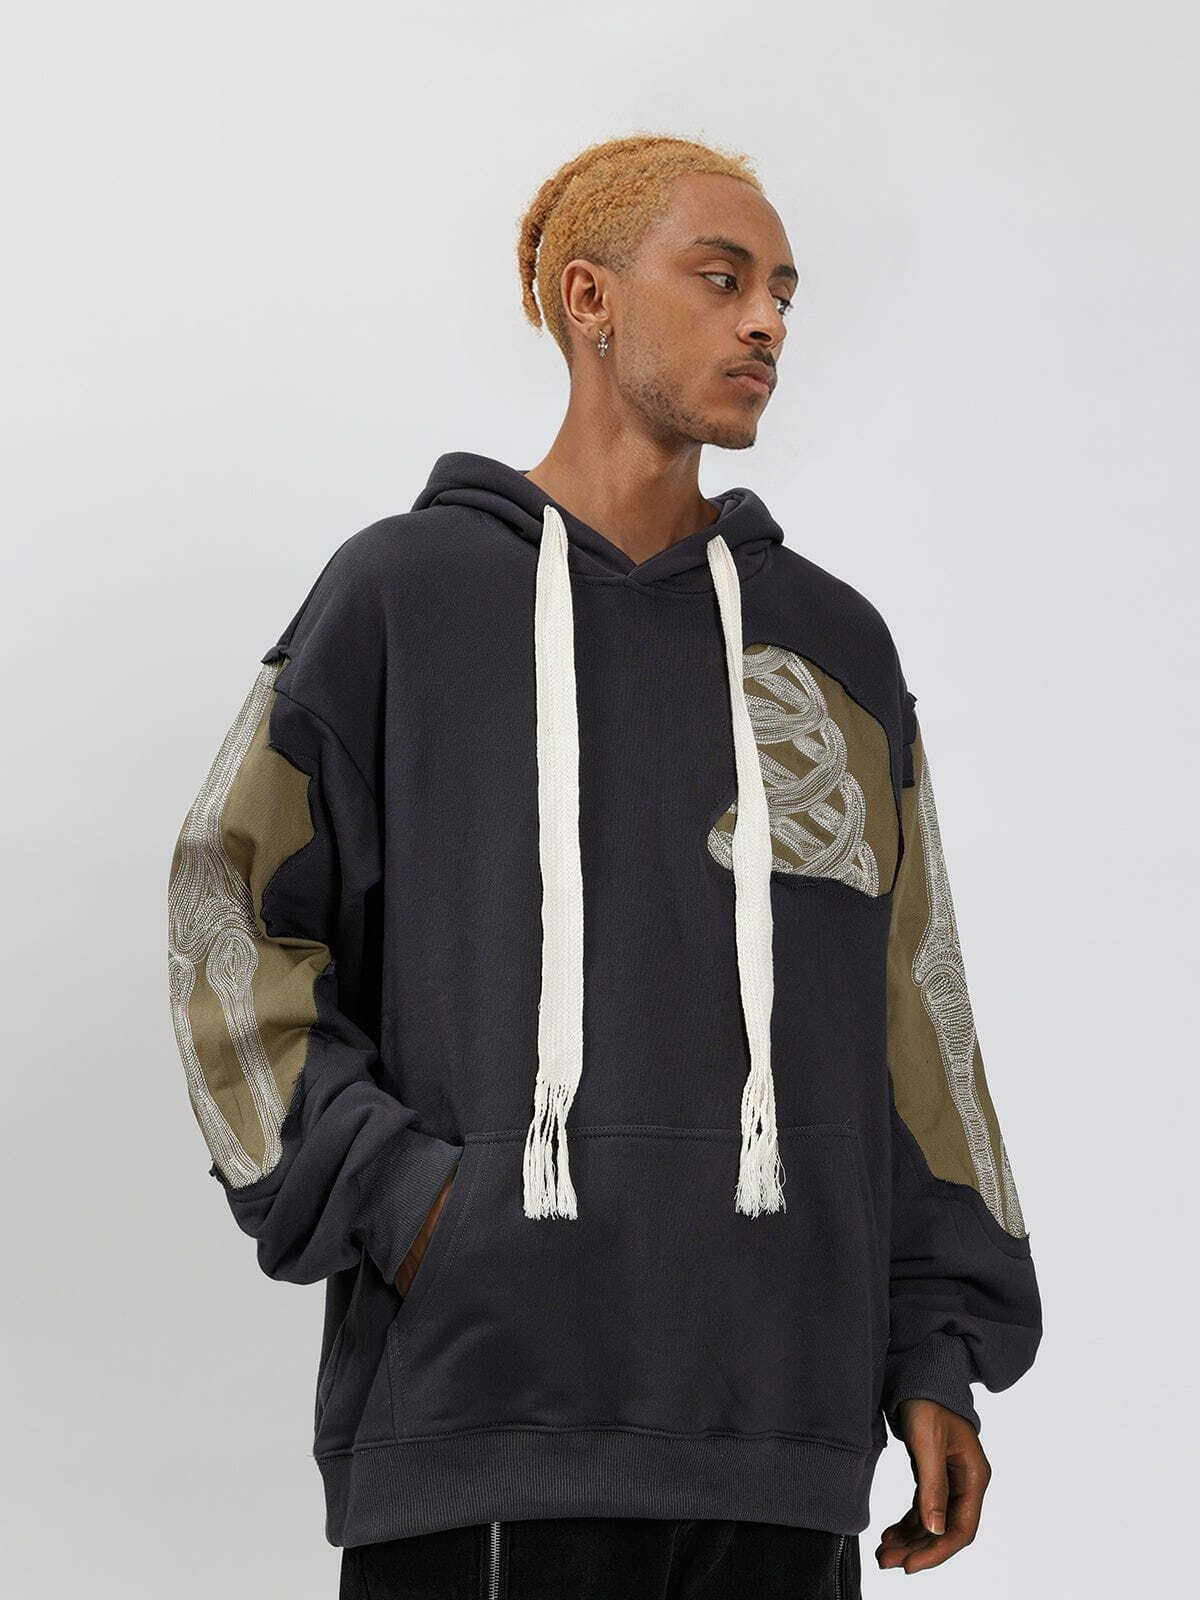 revolutionary skeleton hoodie patchwork urban style 7285